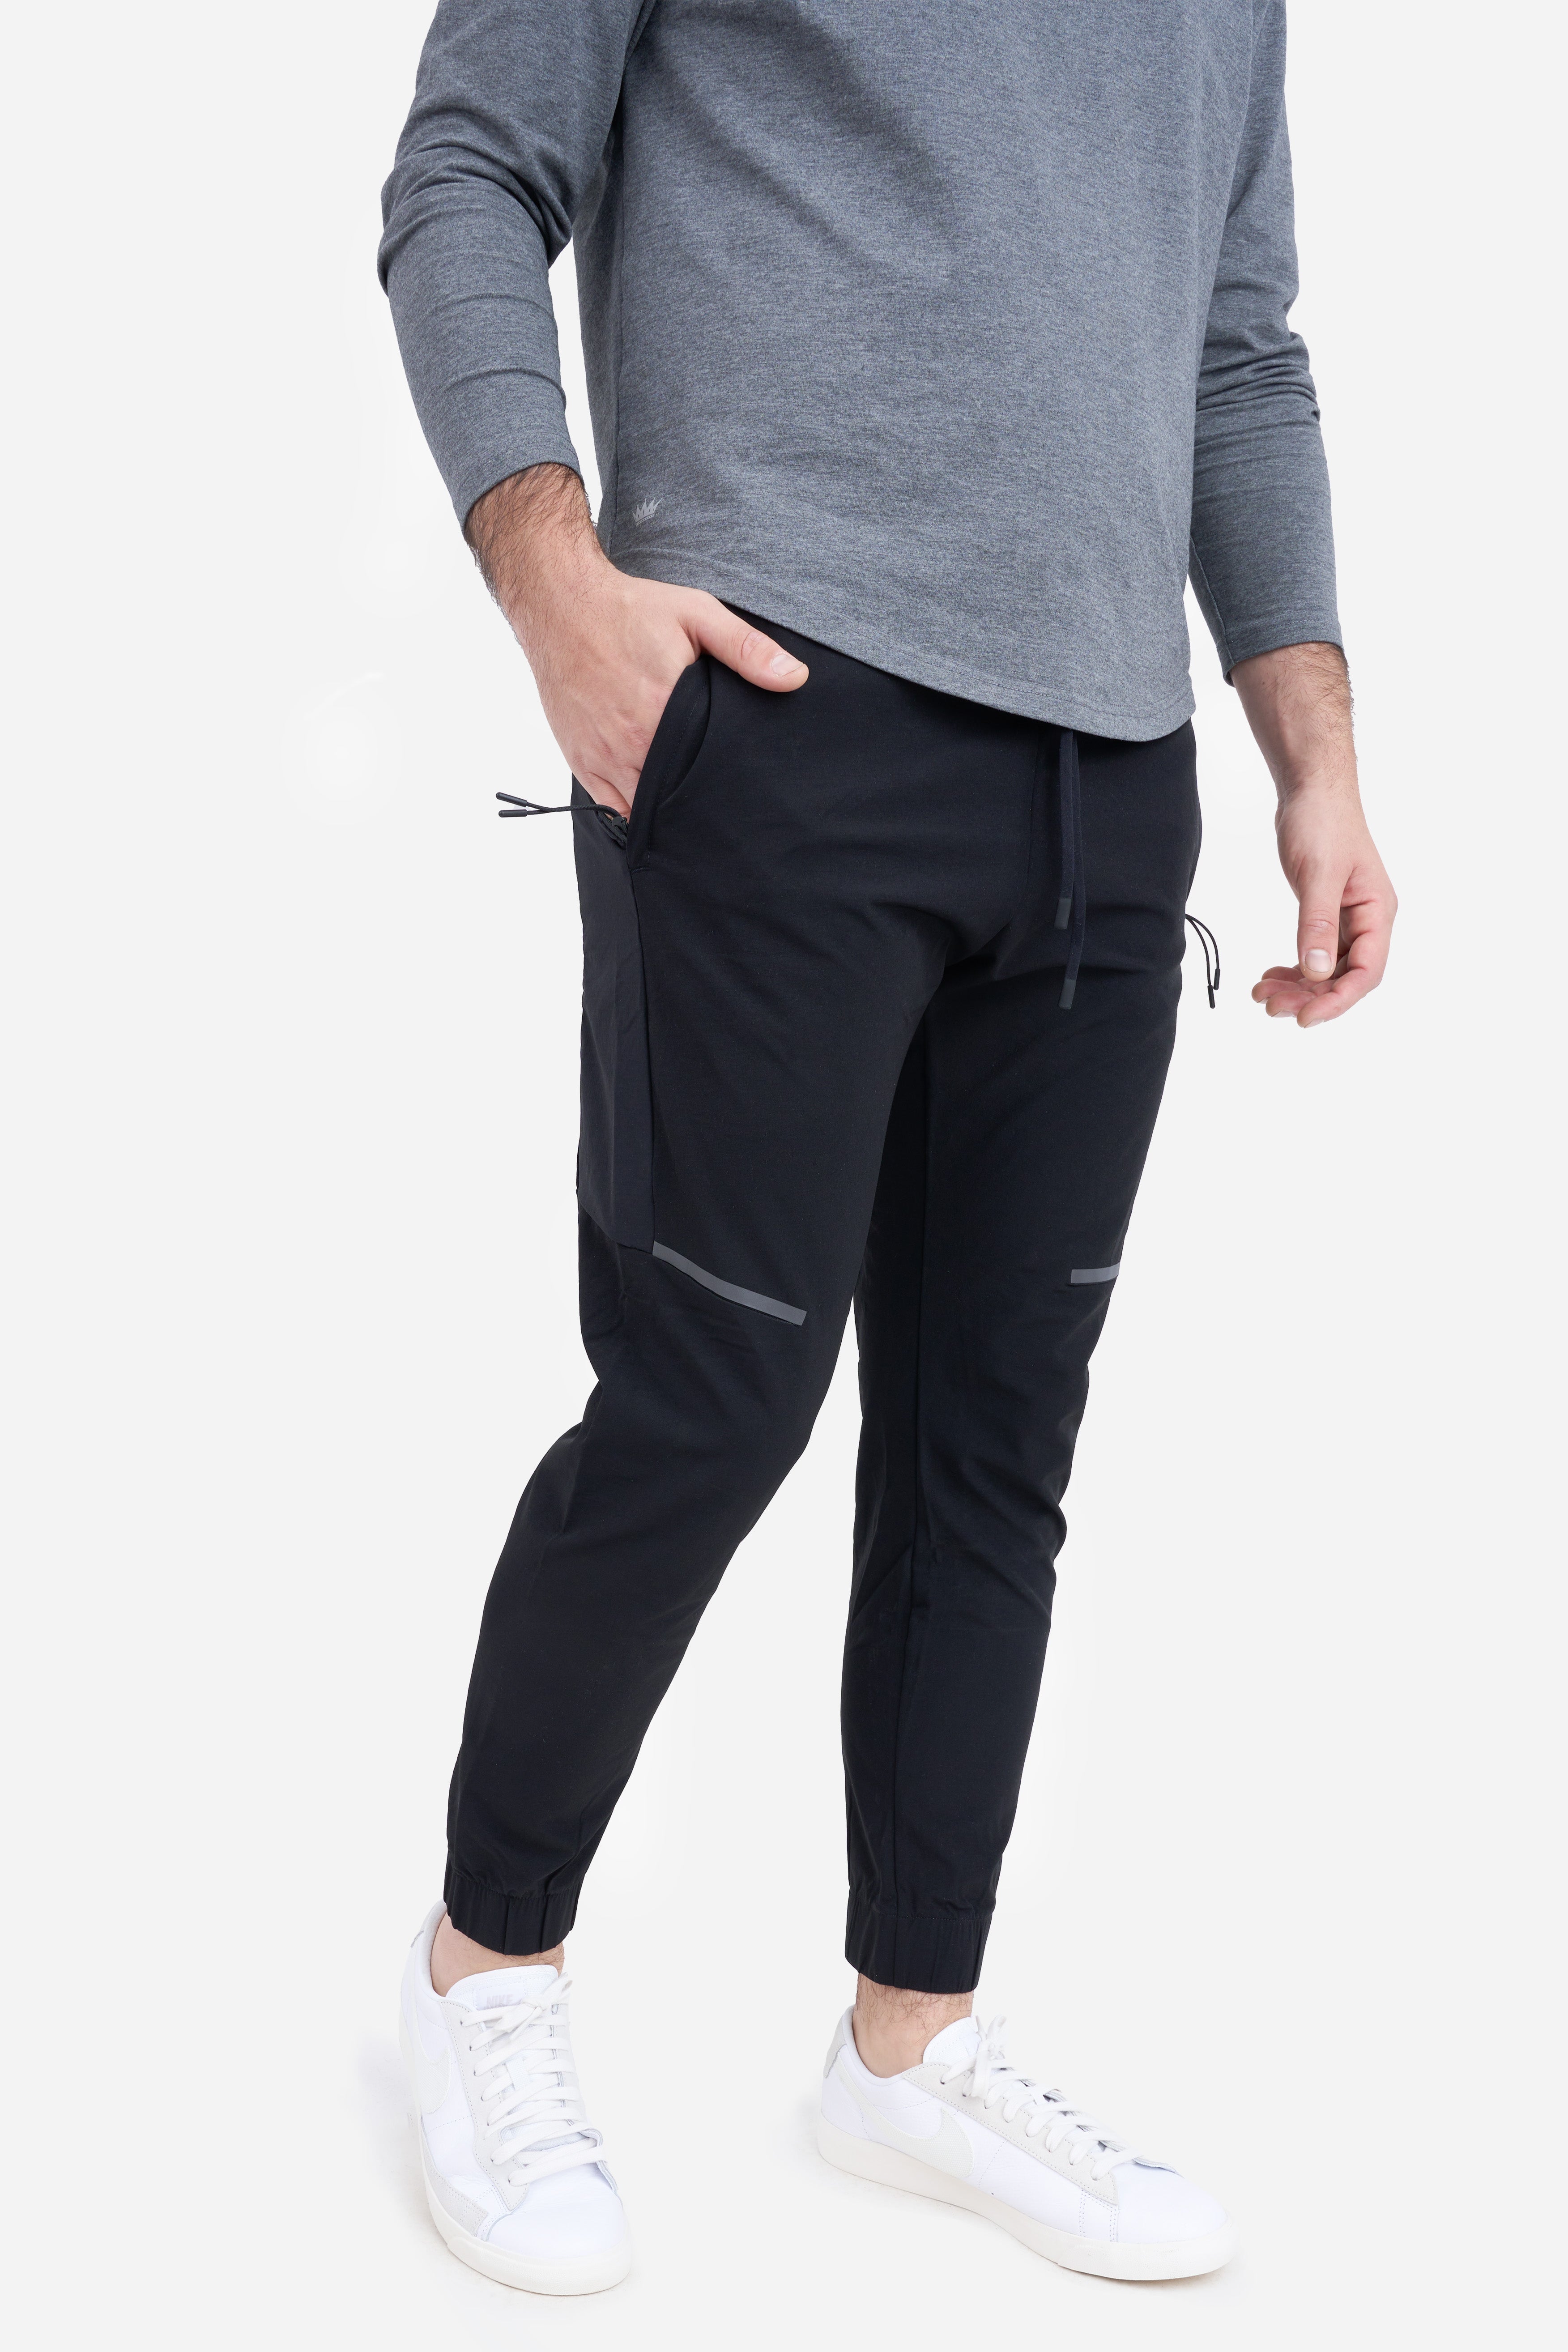 Clearance Sweatpants for Men Men's Fleece Warm Athletic Sweat Pants for Men  Lightweight Gym Joggers Pants Loose Workout Pants Elastic Sports Pants 